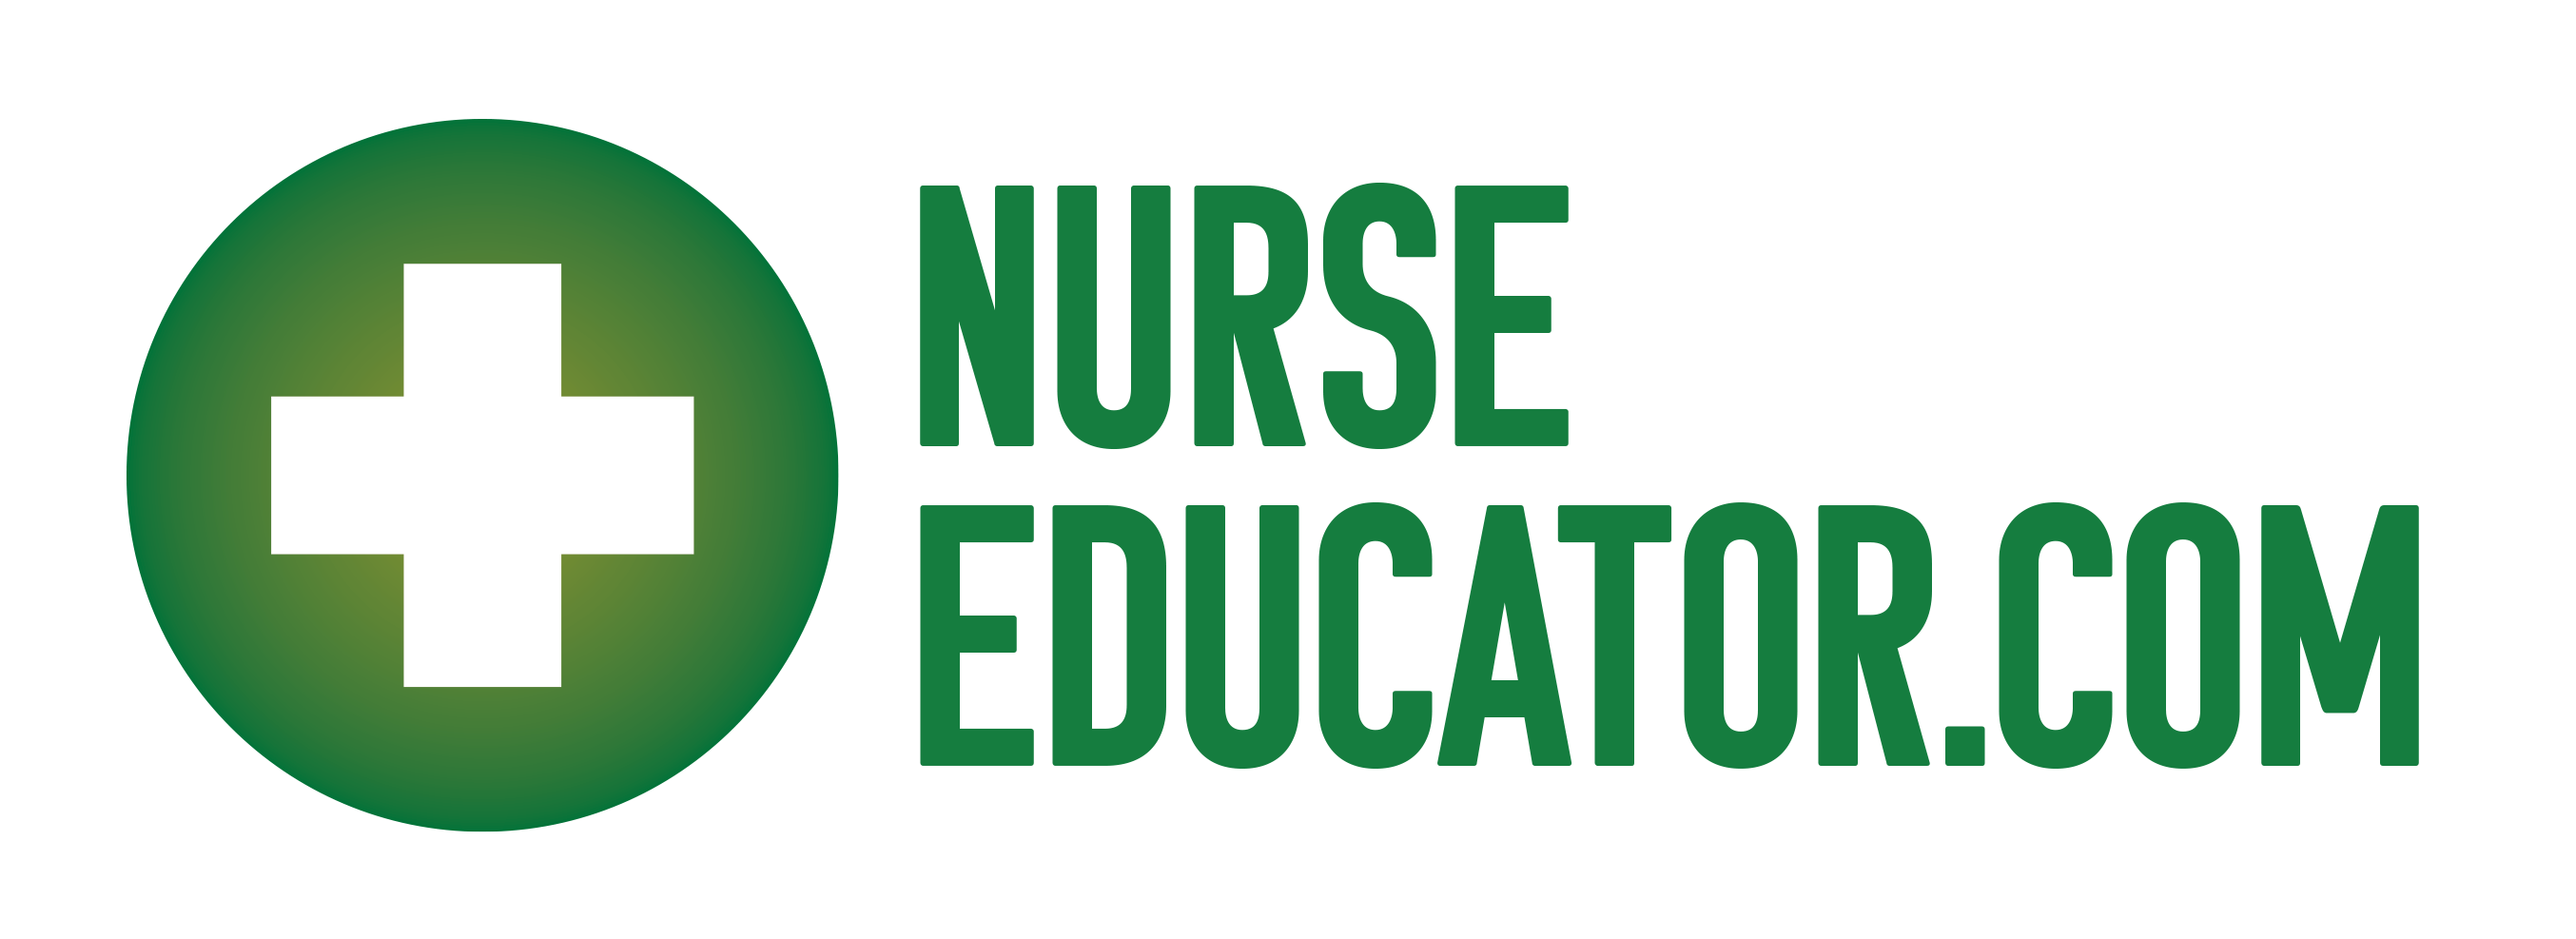 phd nursing education programs